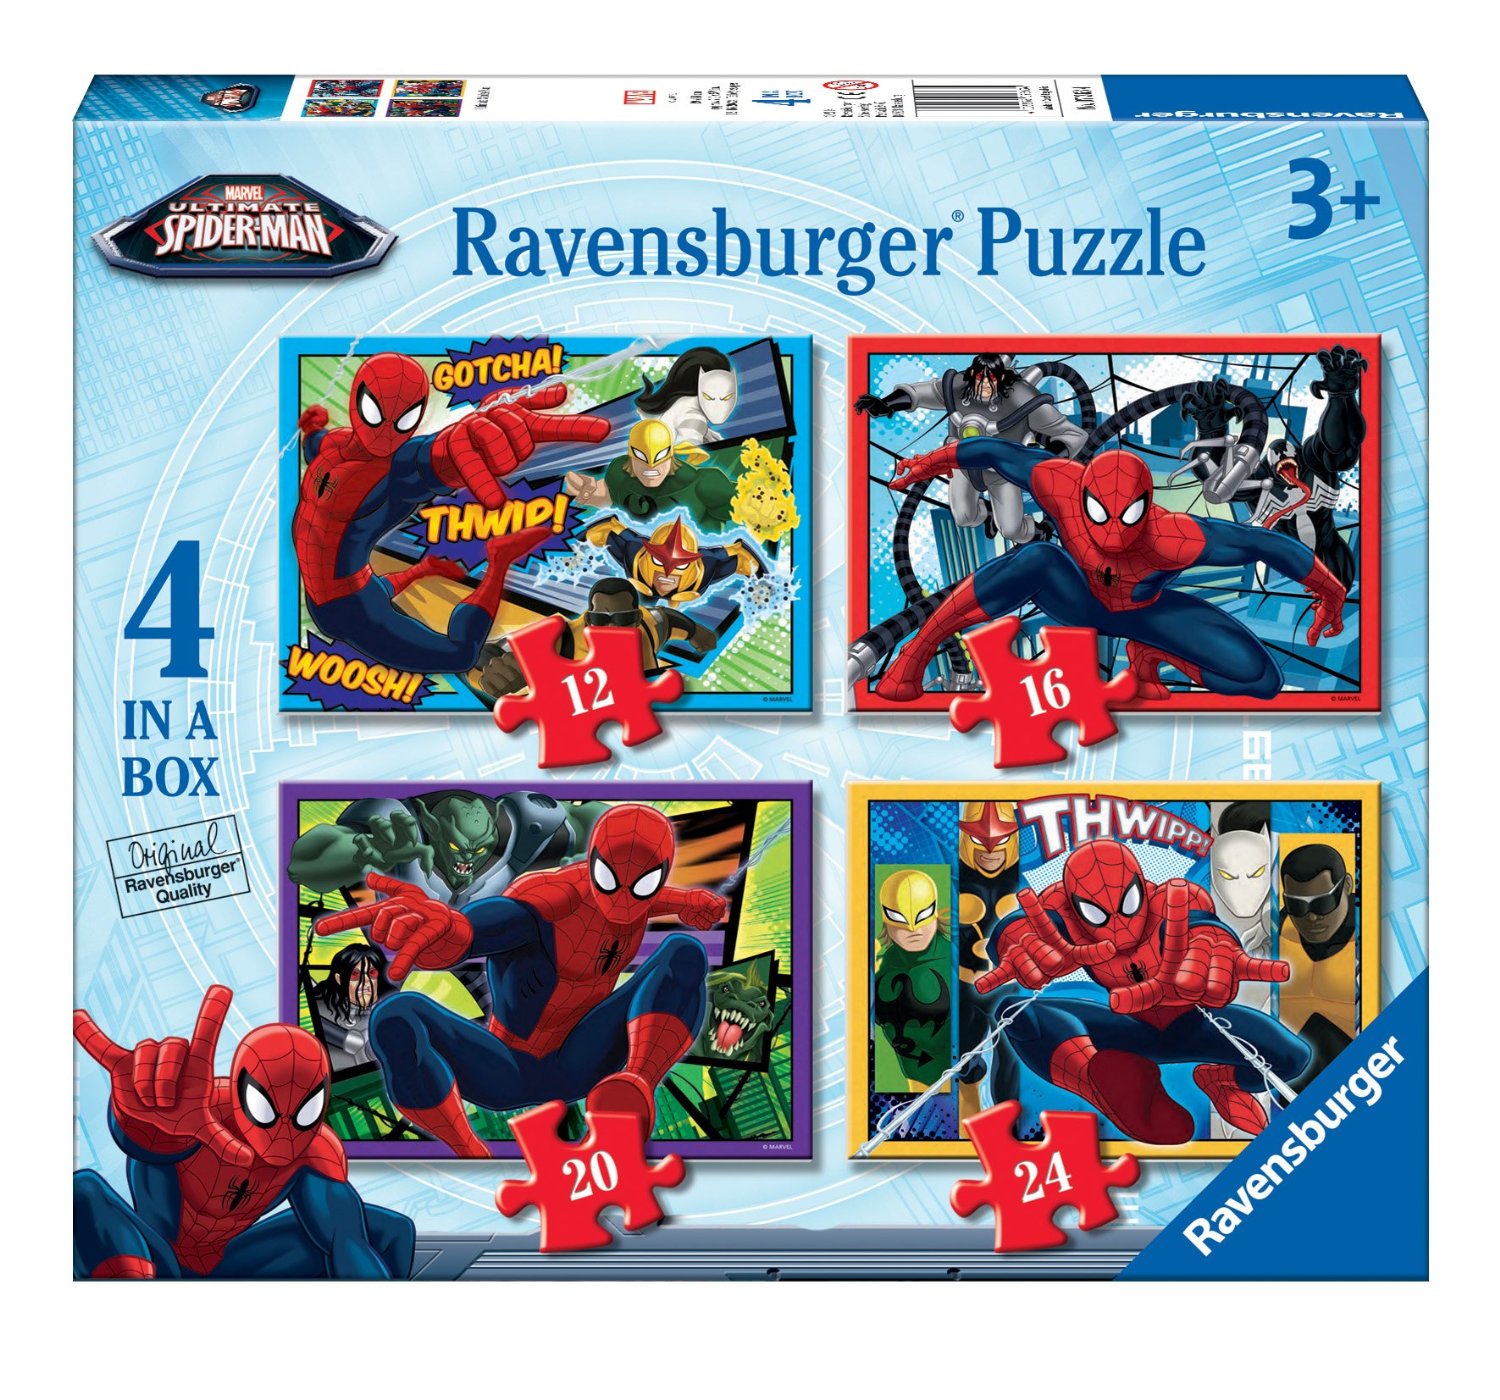 https://data.puzzle.fr/ravensburger.5/4-puzzles-spiderman-puzzle-12-pieces.52826-1.fs.jpg